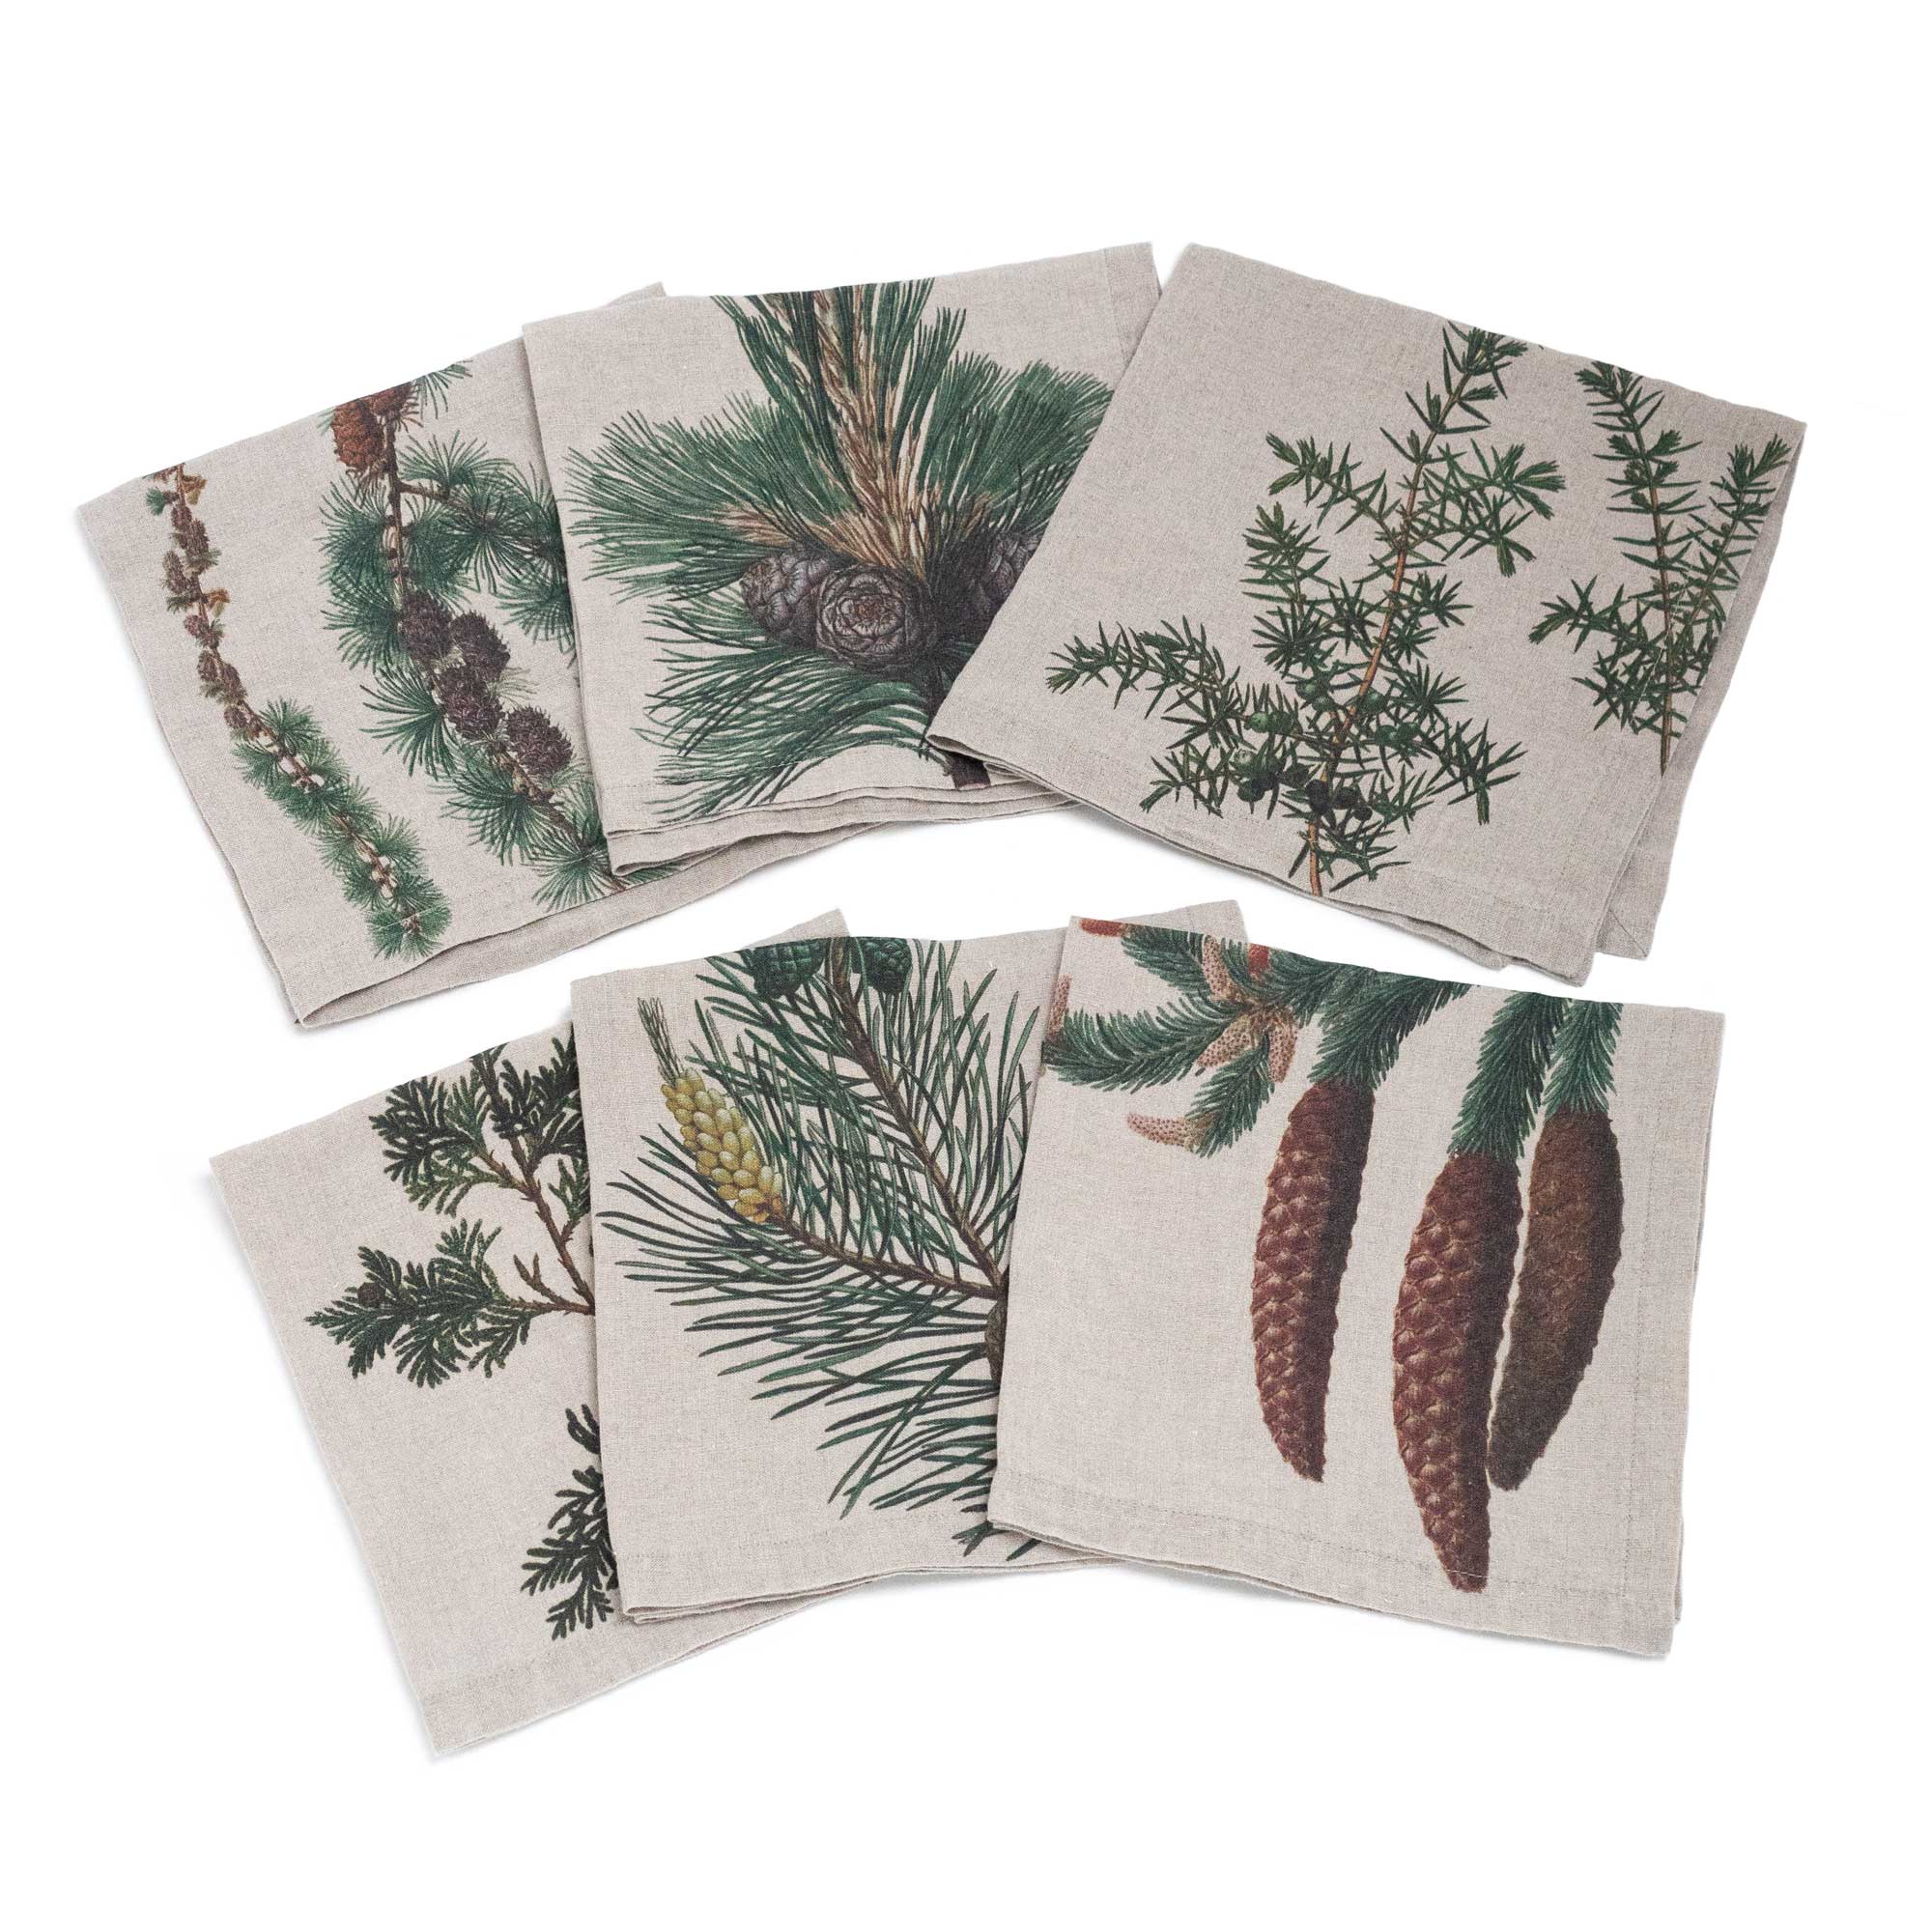 'Set of Trees & Conifers Linen Napkins'